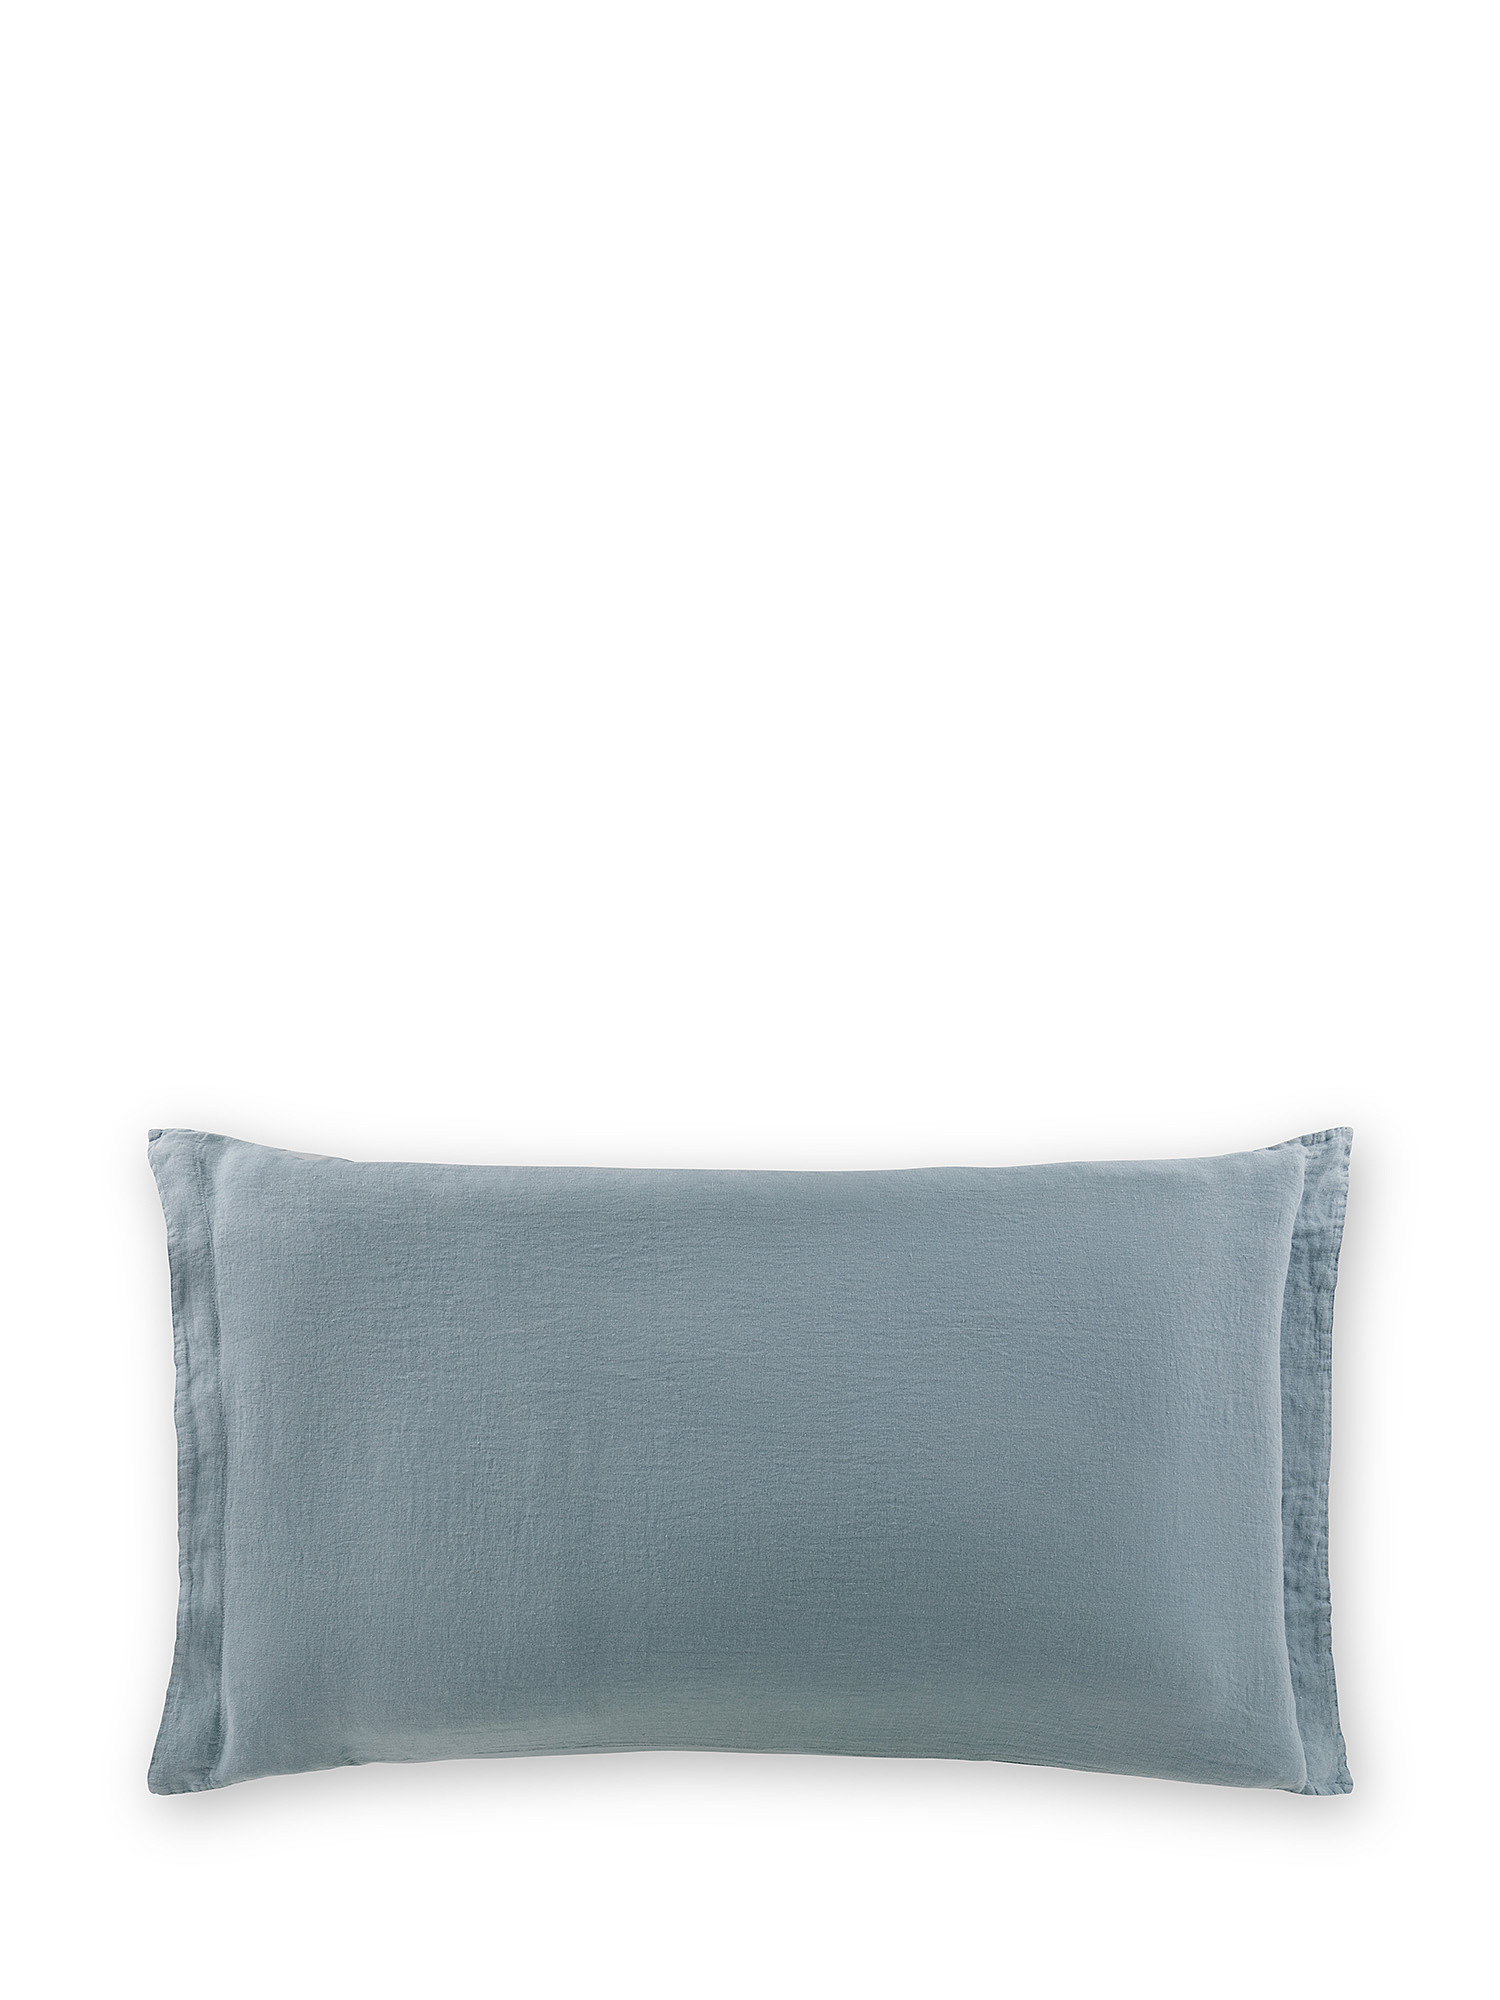 Zefiro plain color linen and cotton pillowcase, Blue, large image number 0